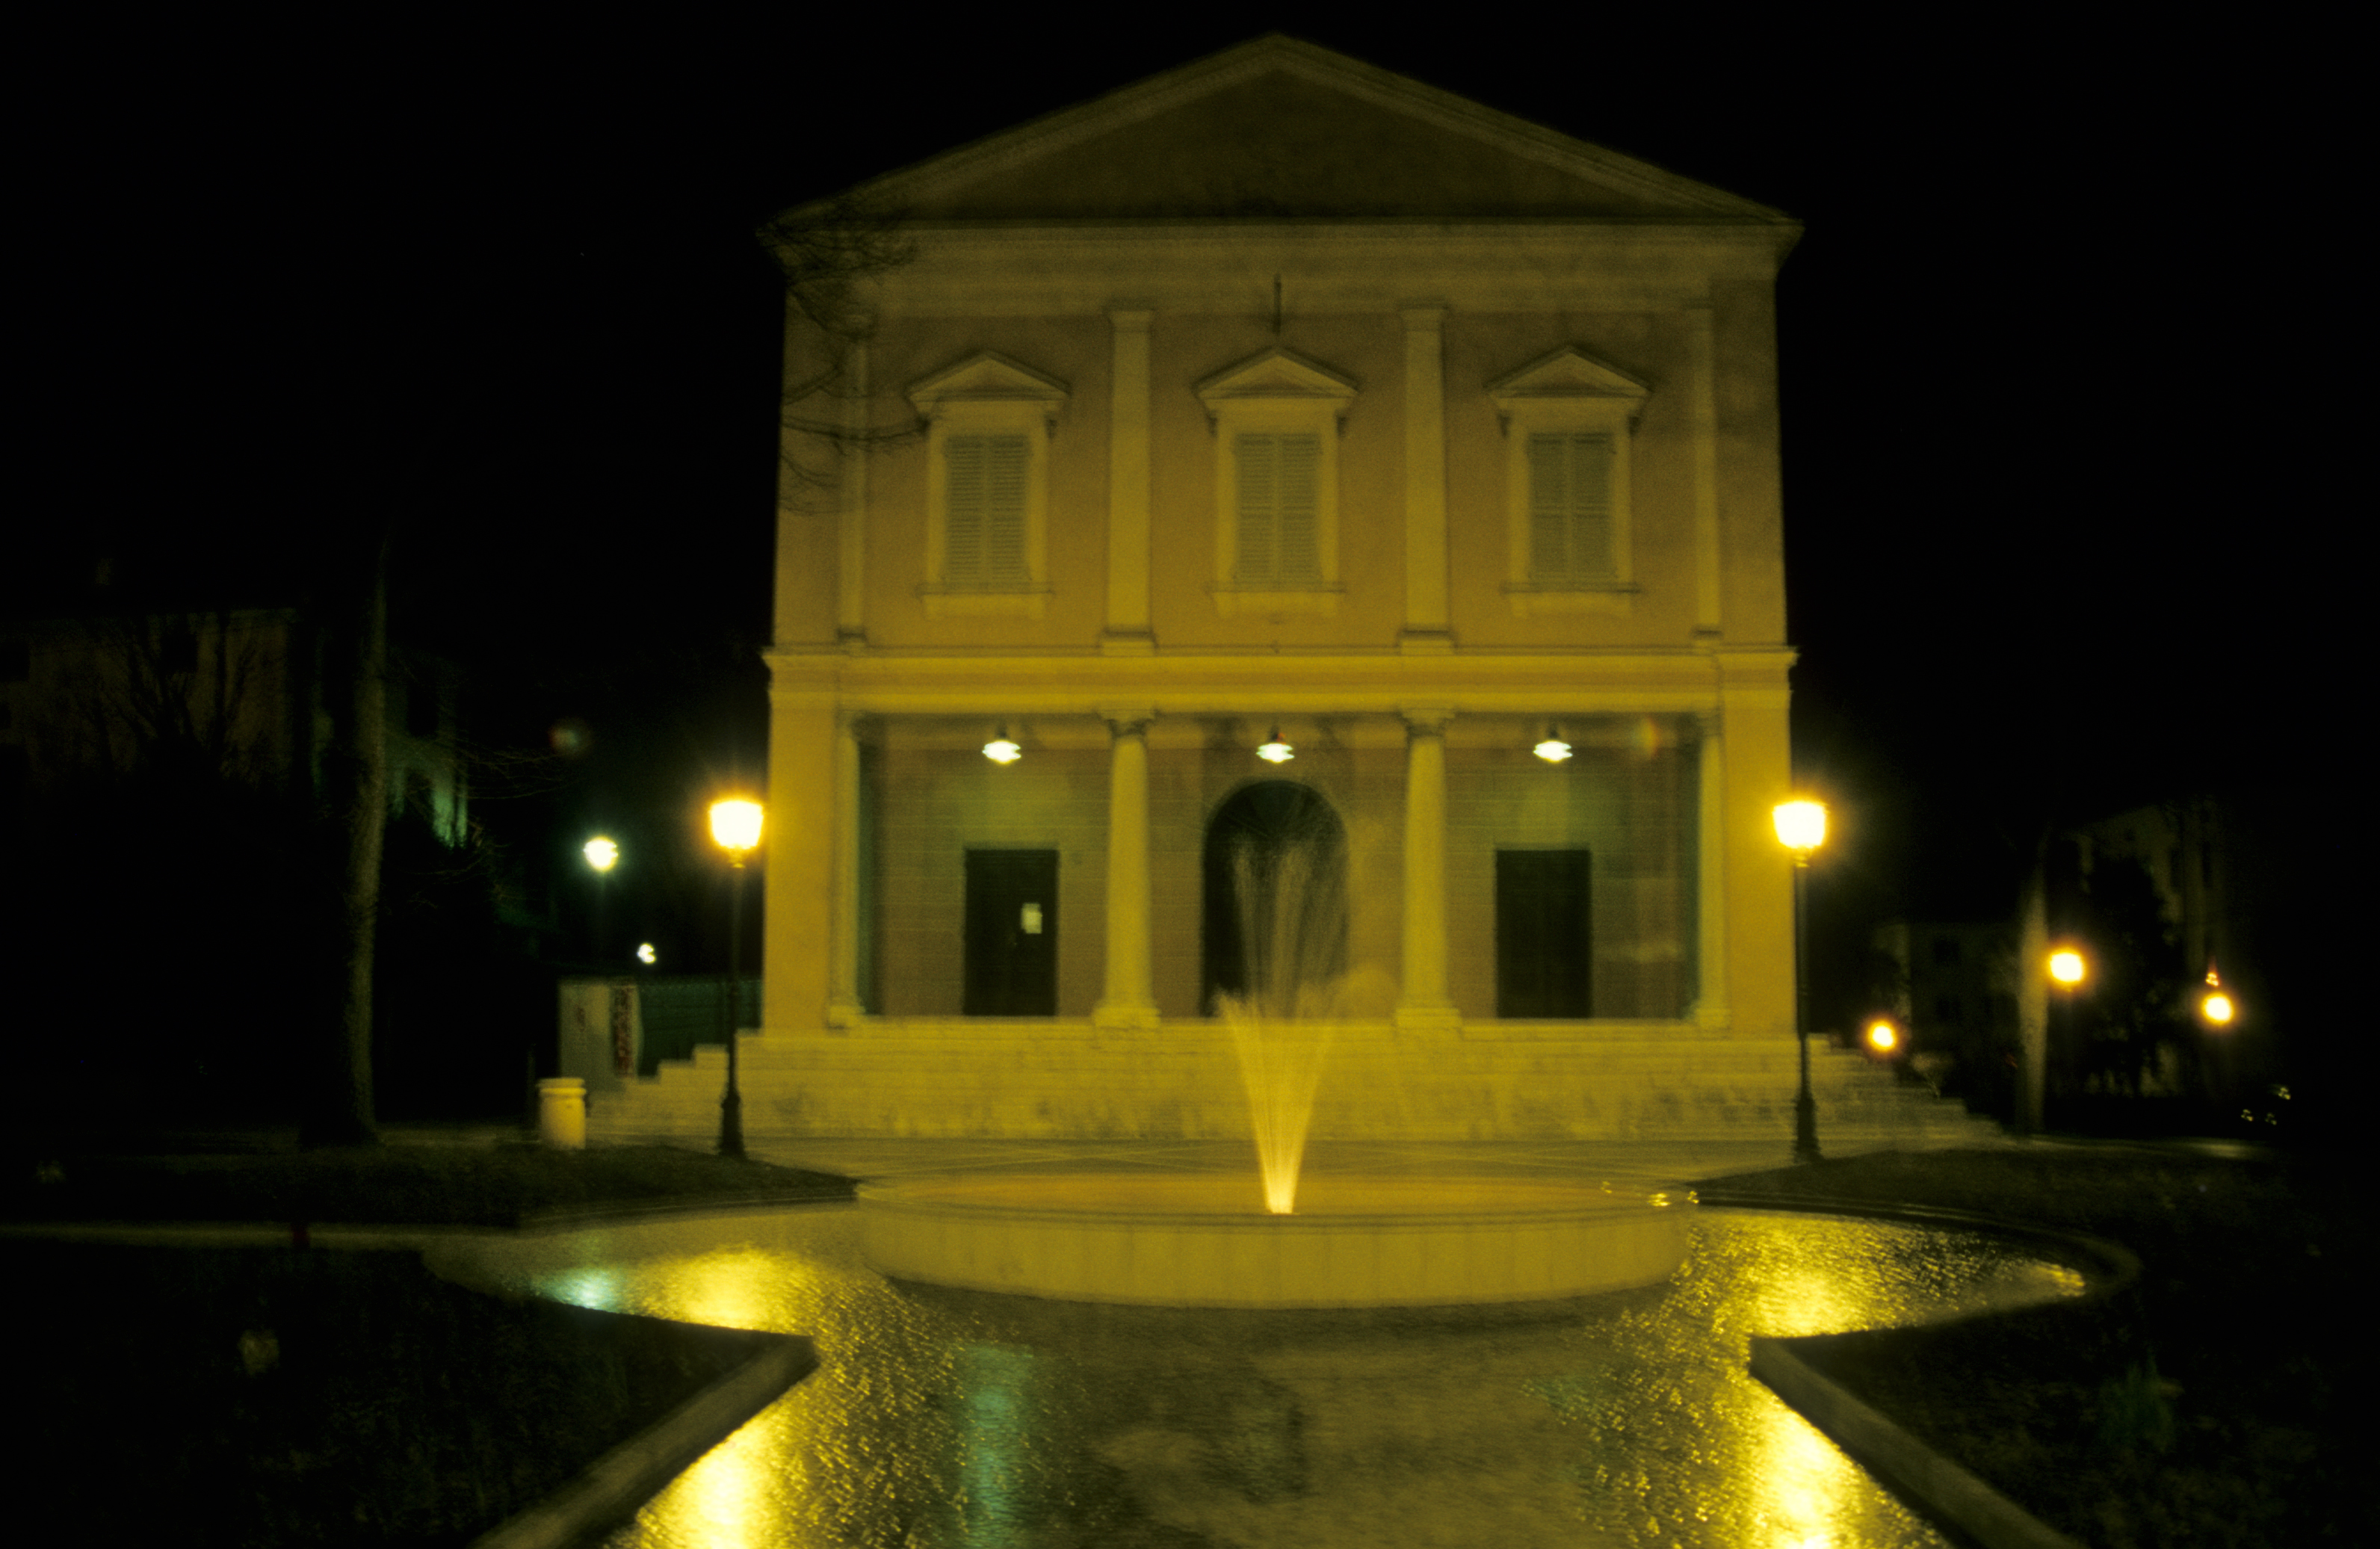 foto: https://upload.wikimedia.org/wikipedia/commons/c/c6/Teatro_Comunale_di_notte.jpg